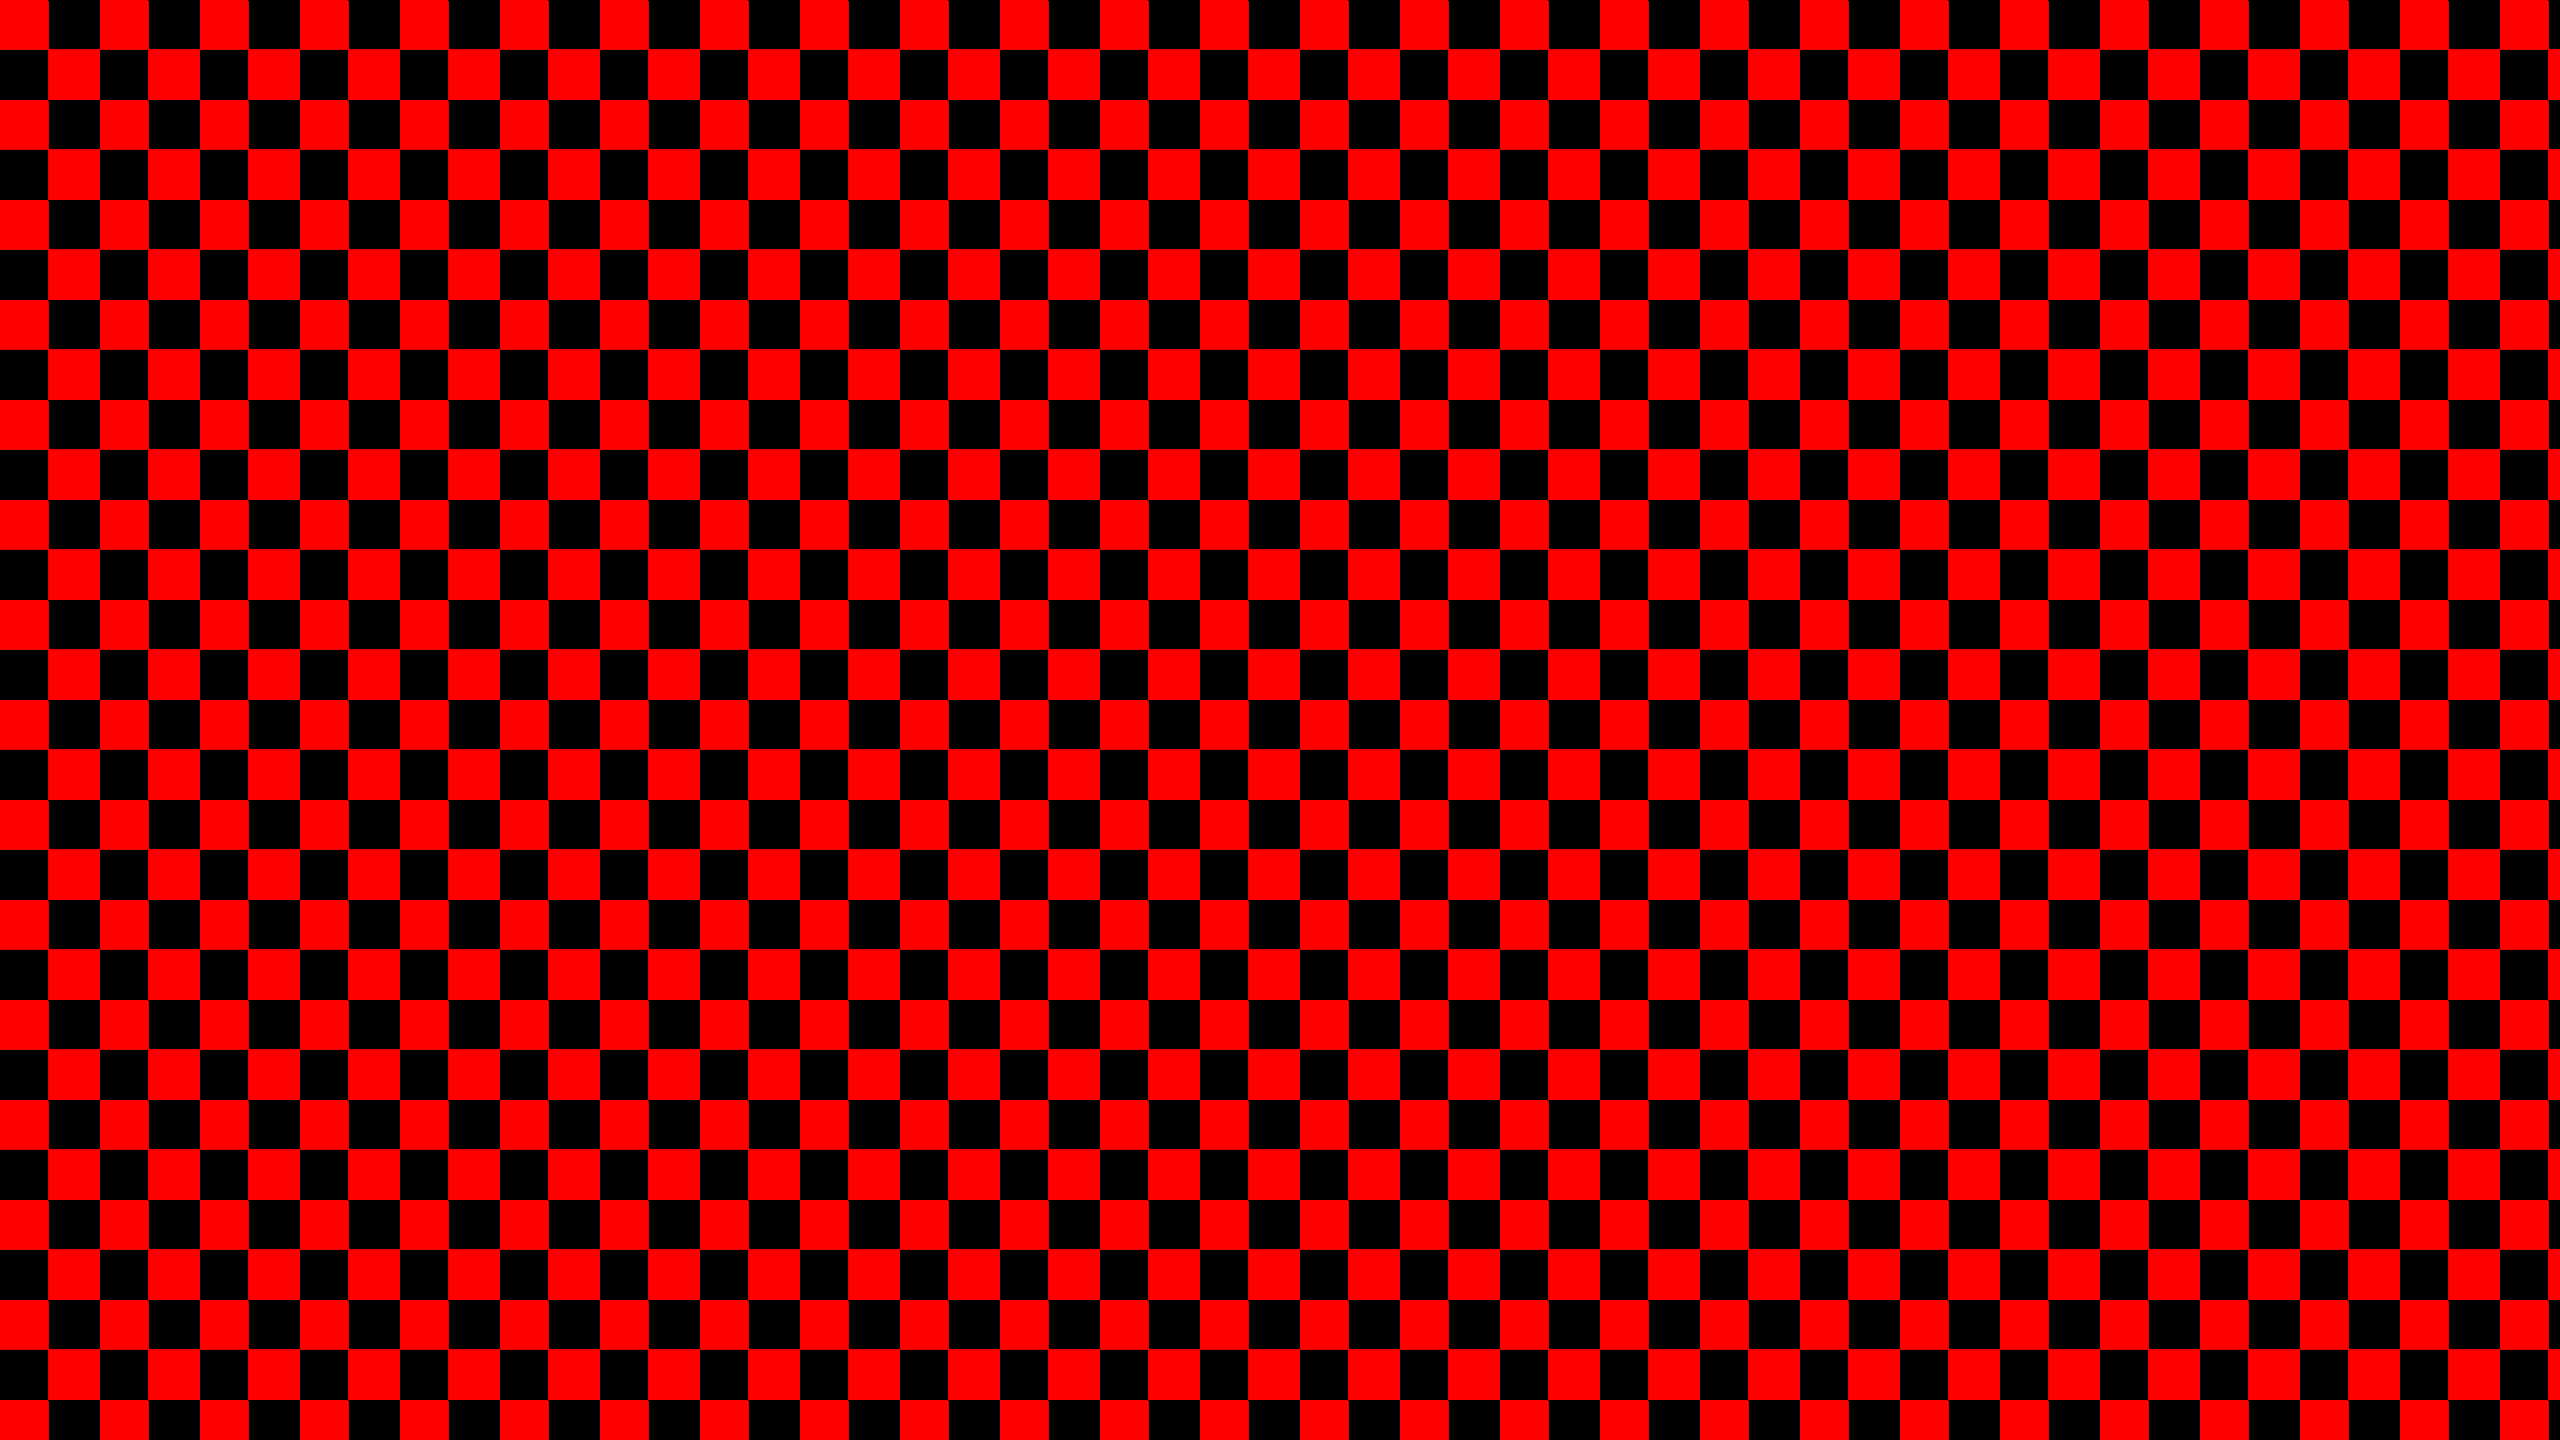 Red Aesthetic Tumblr Wallpaper 2560×1440